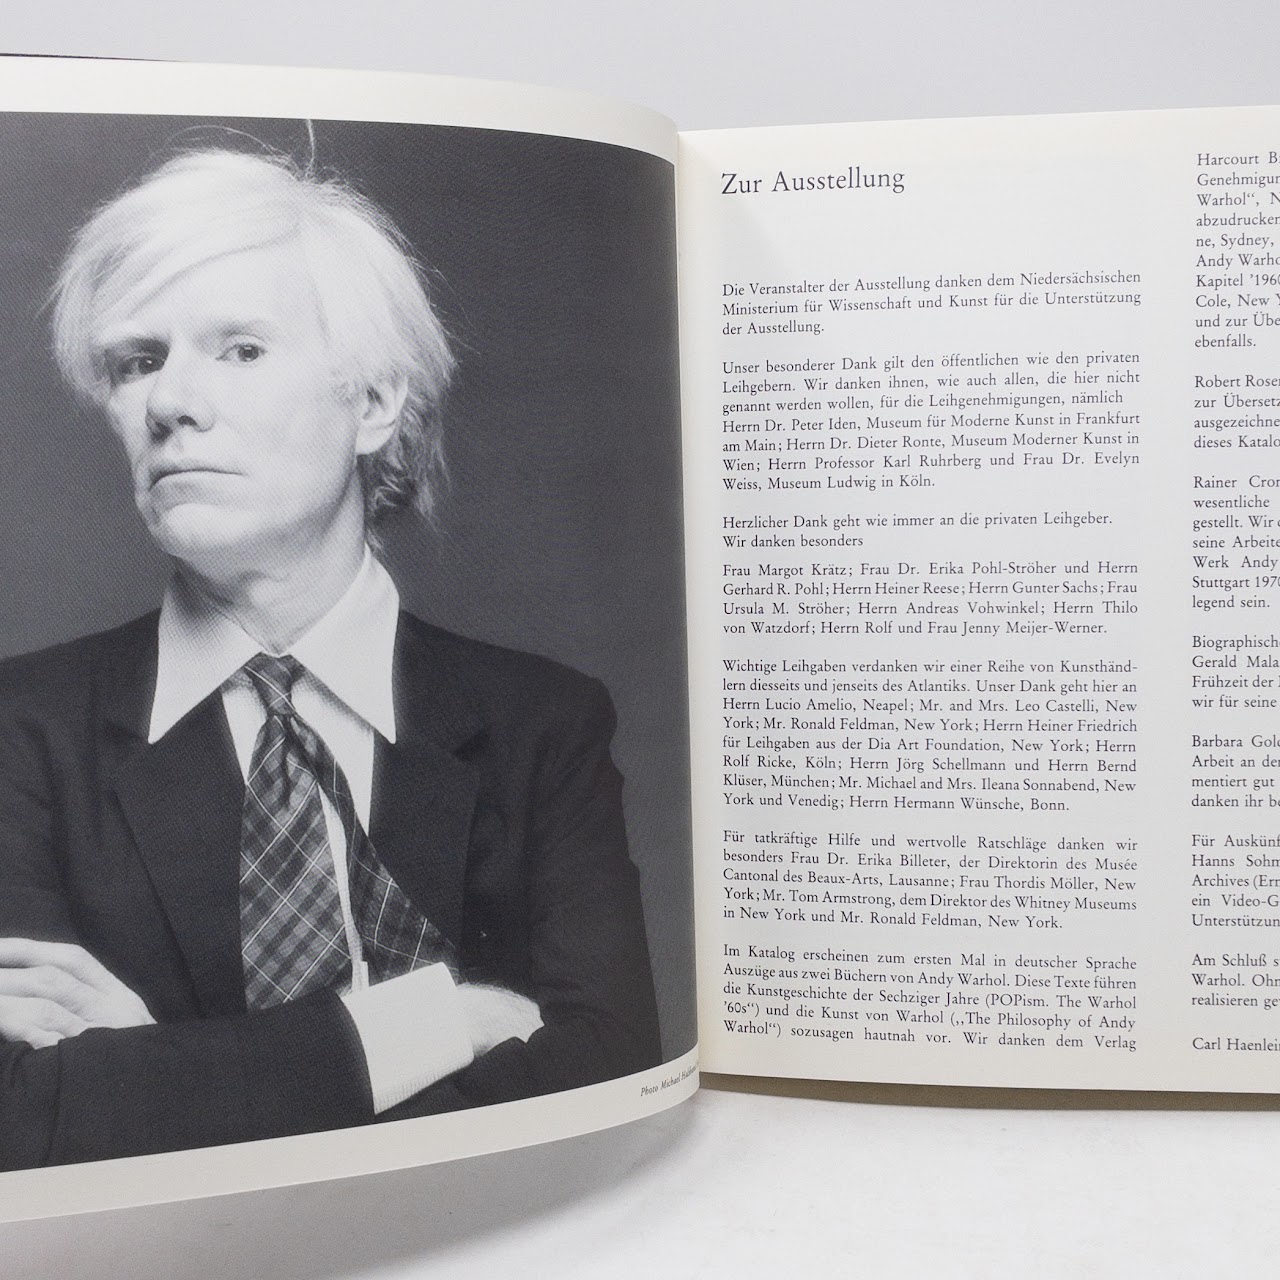 Andy Warhol Pictures From 1961-1981 Kestner Gesellschaft